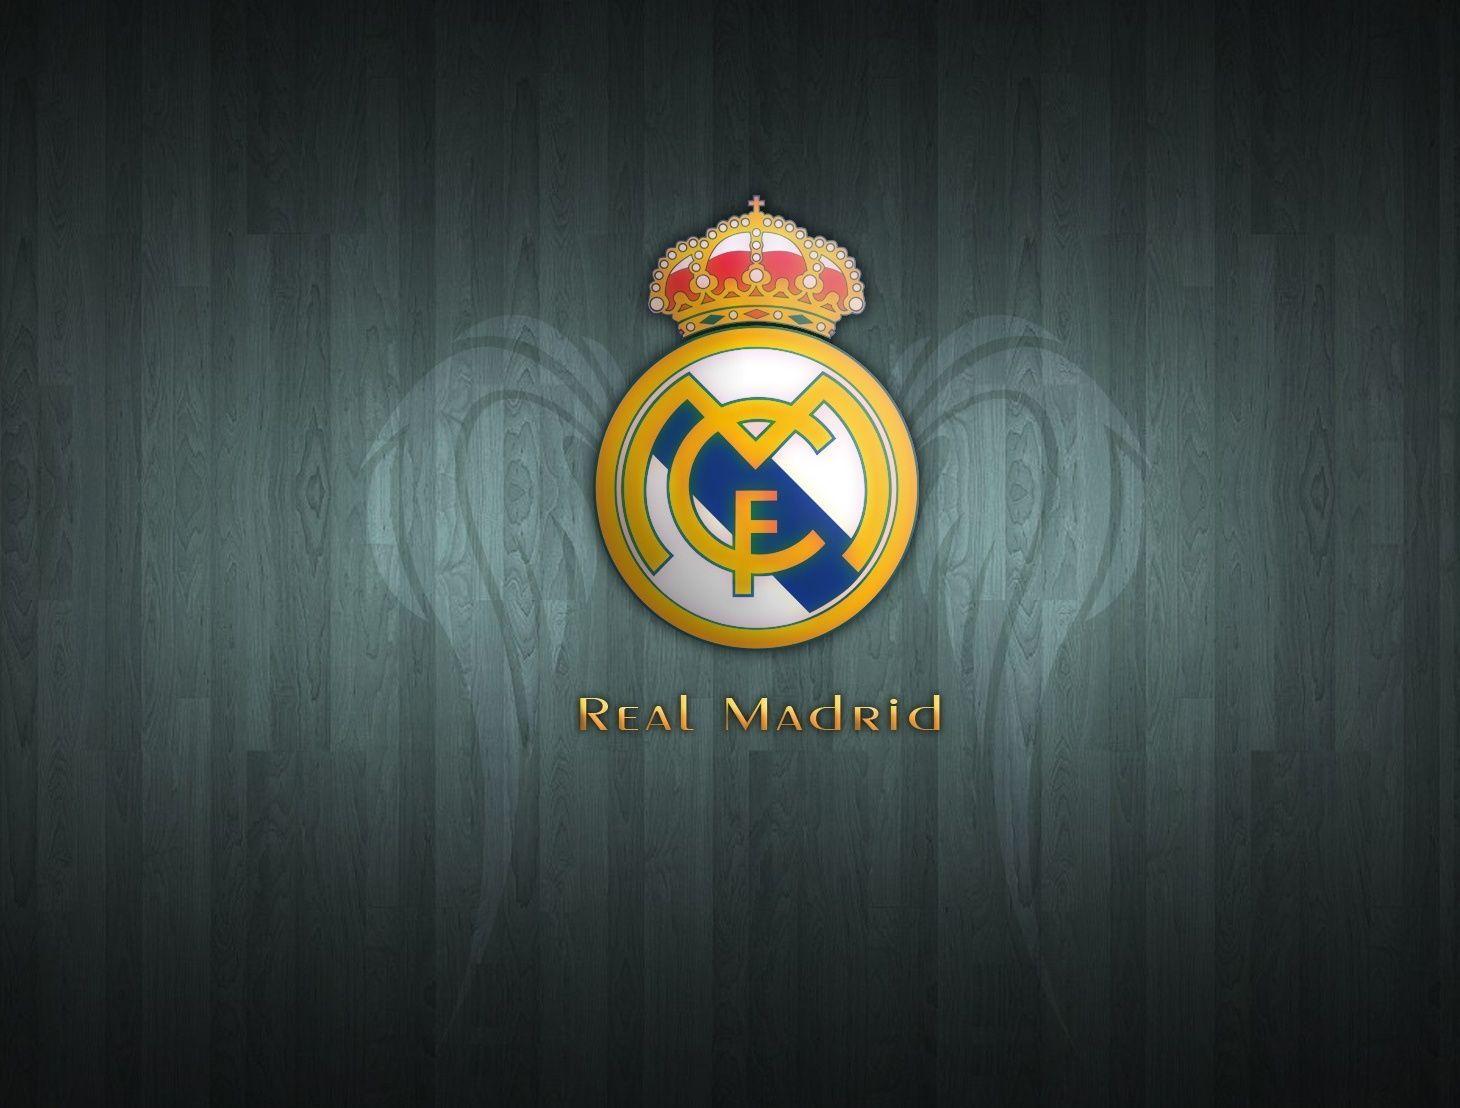 Real Madrid Wallpaper 1460×1108 Image Real Madrid Wallpaper 50